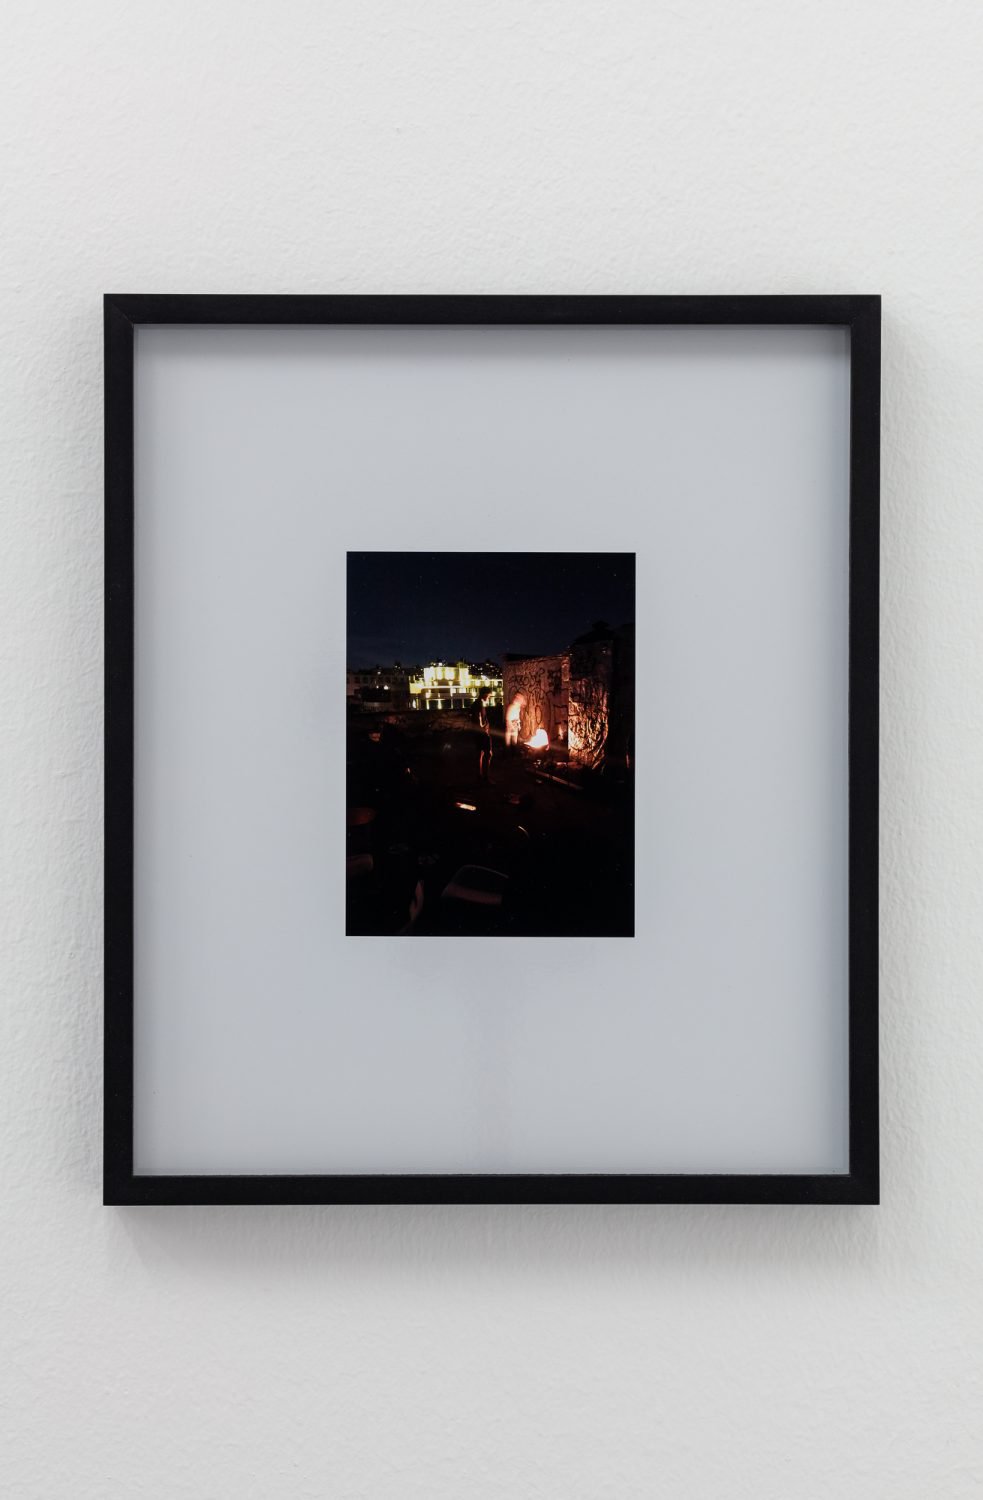 Benjamin HirteBBQ on Broome Street, 2020Lambda print, framed32 x 27 cmFirst Houses, Layr Seilerstaette, Vienna, 2020